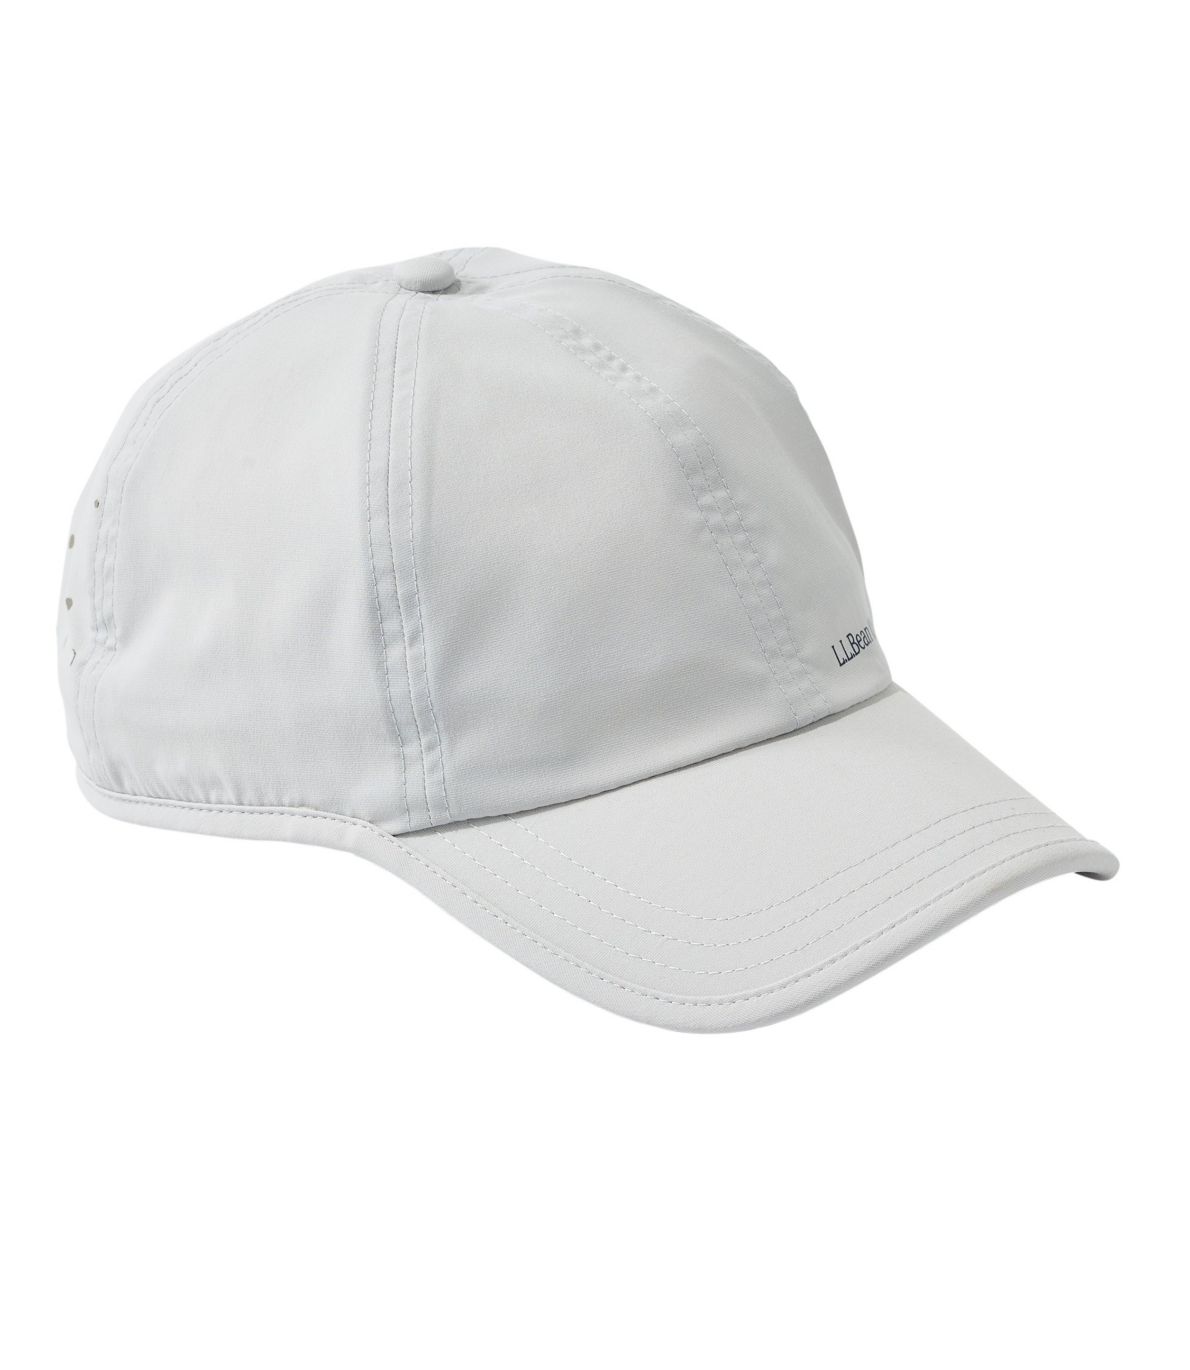 Adults' Tropicwear Baseball Fishing Hat